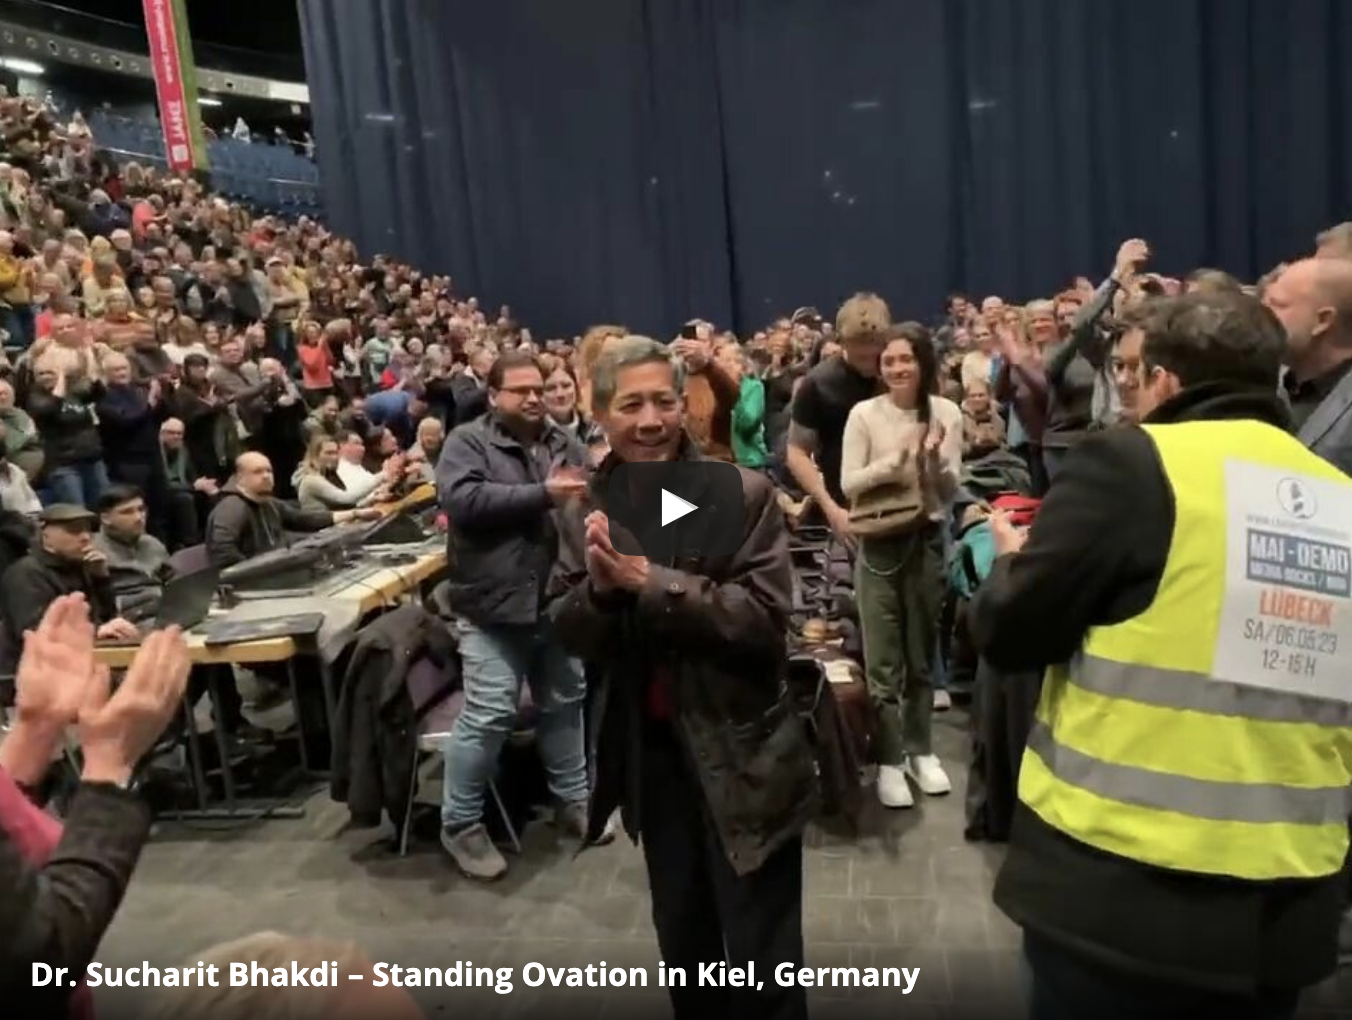 Dr. Sucharit Bhakdi Receives Standing Ovation in Kiel, Germany